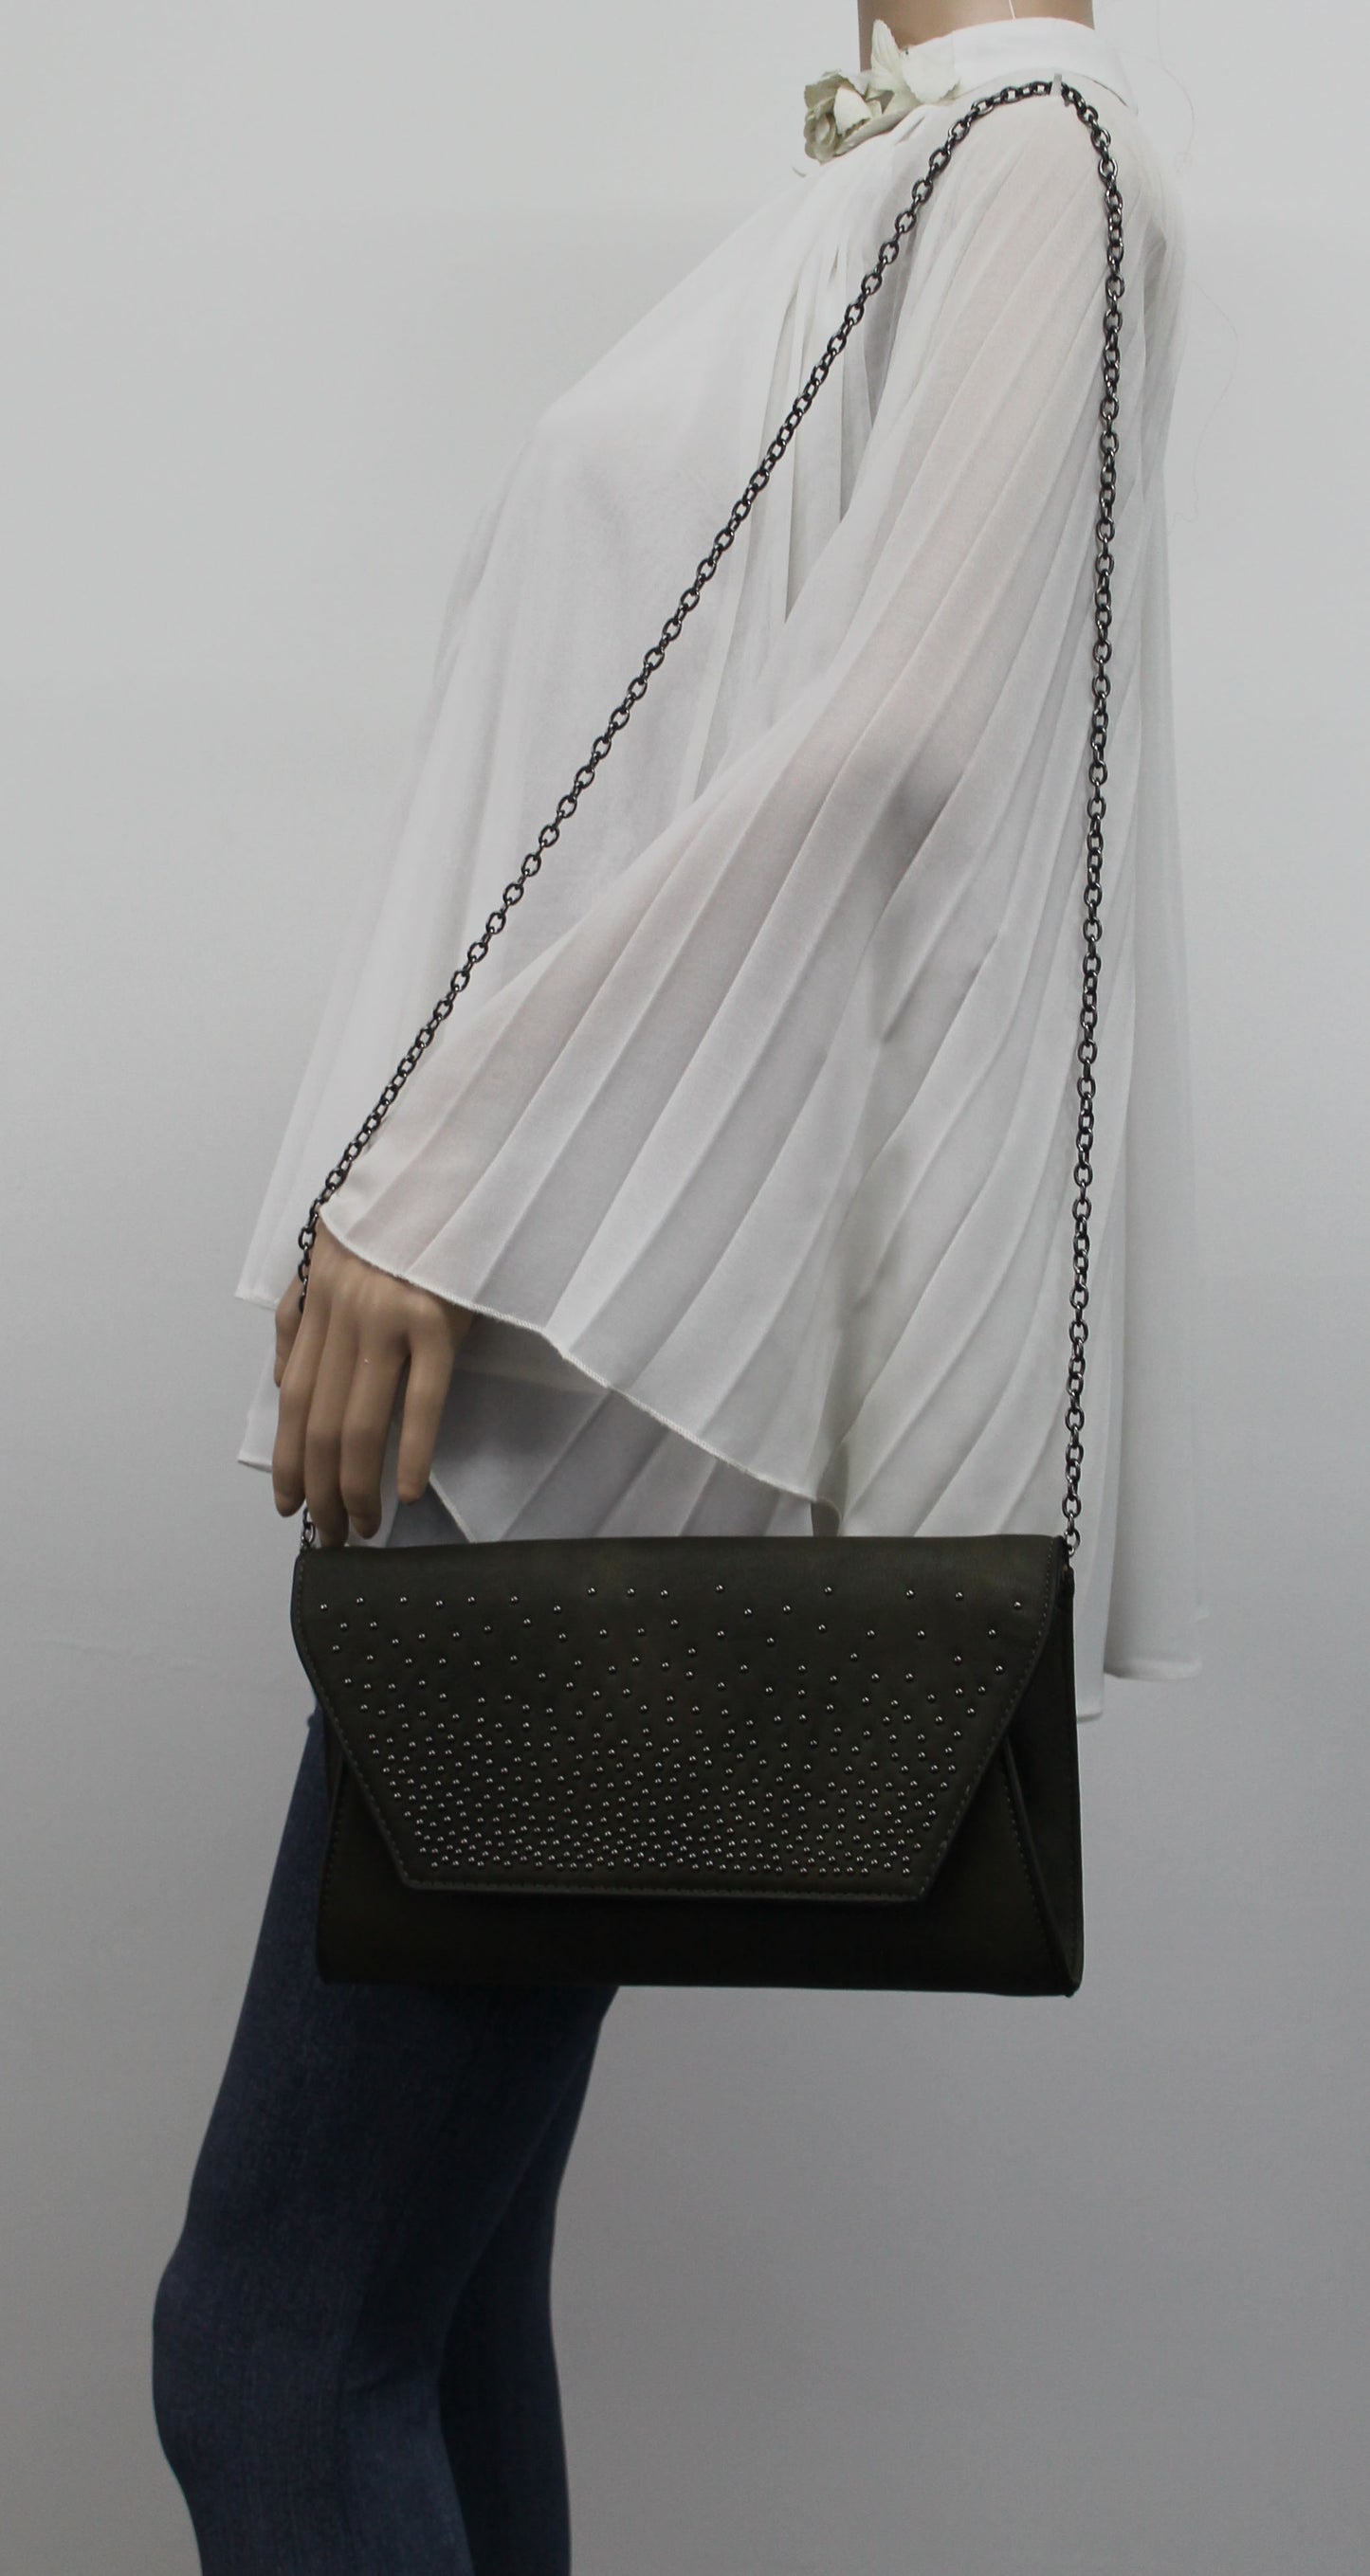 SWANKYSWANS Paige Diamante Stud Clutch Bag Grey Cute Cheap Clutch Bag For Weddings School and Work